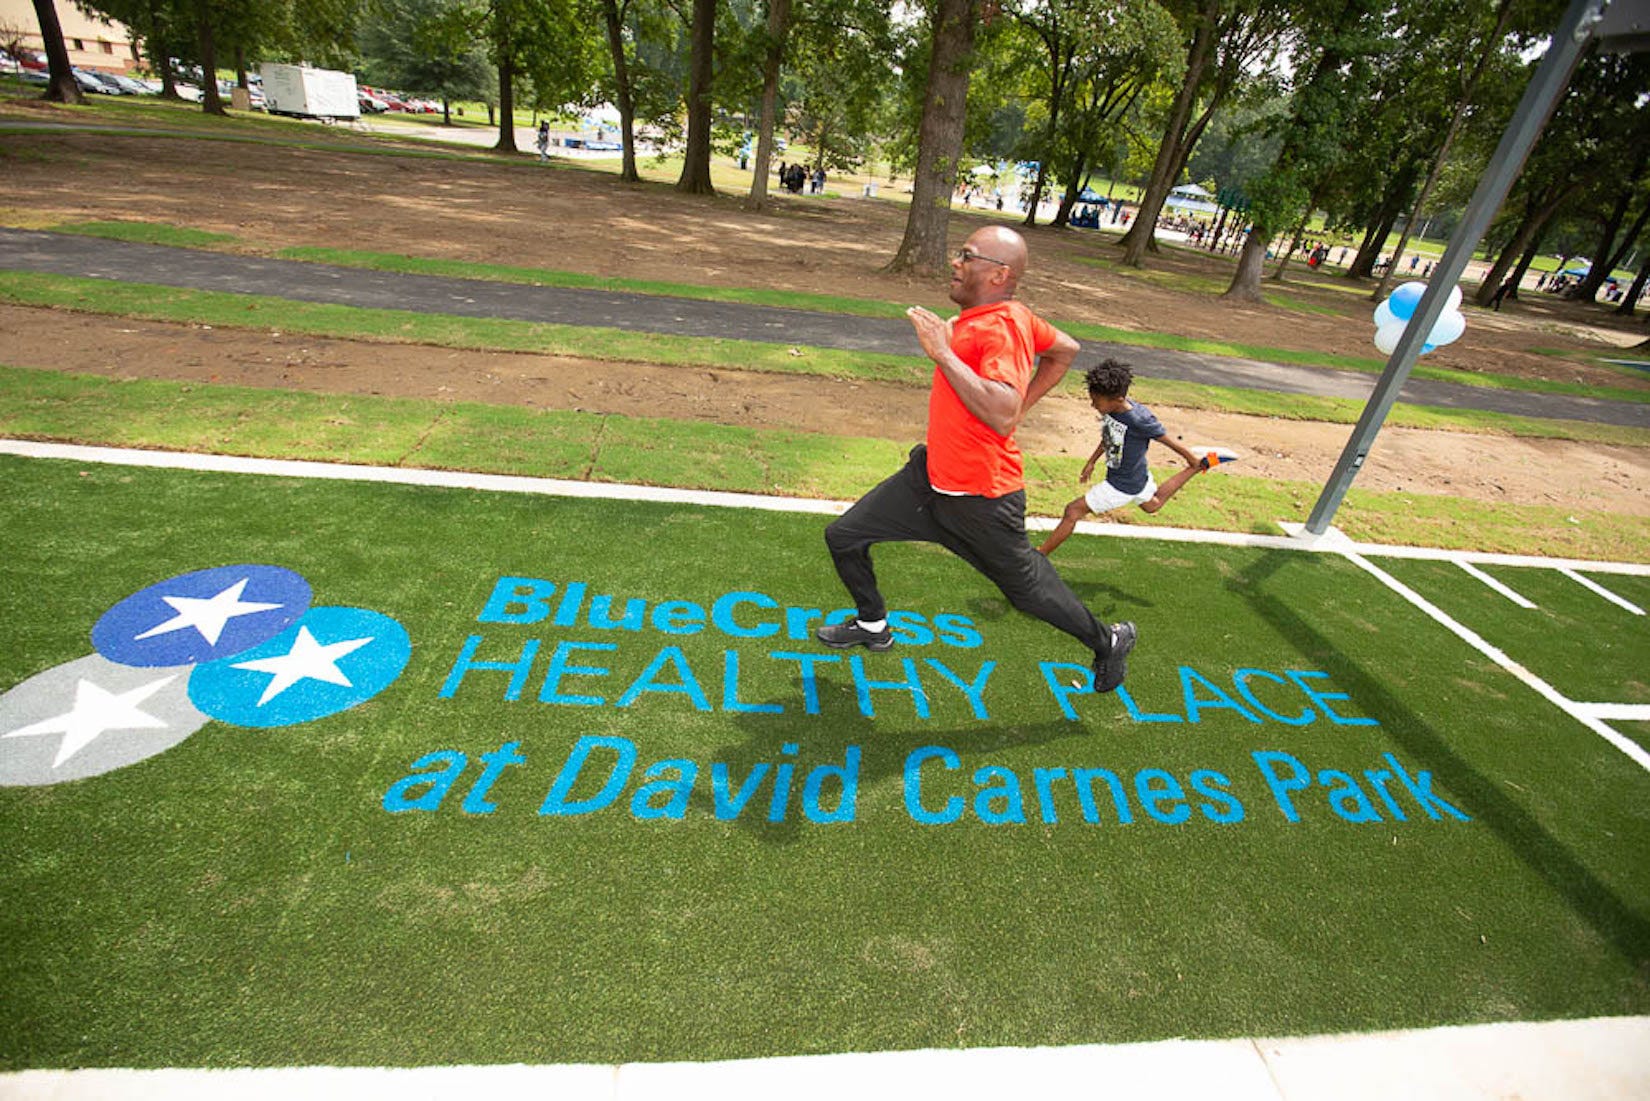 BlueCross Healthy Place at David Carnes Park